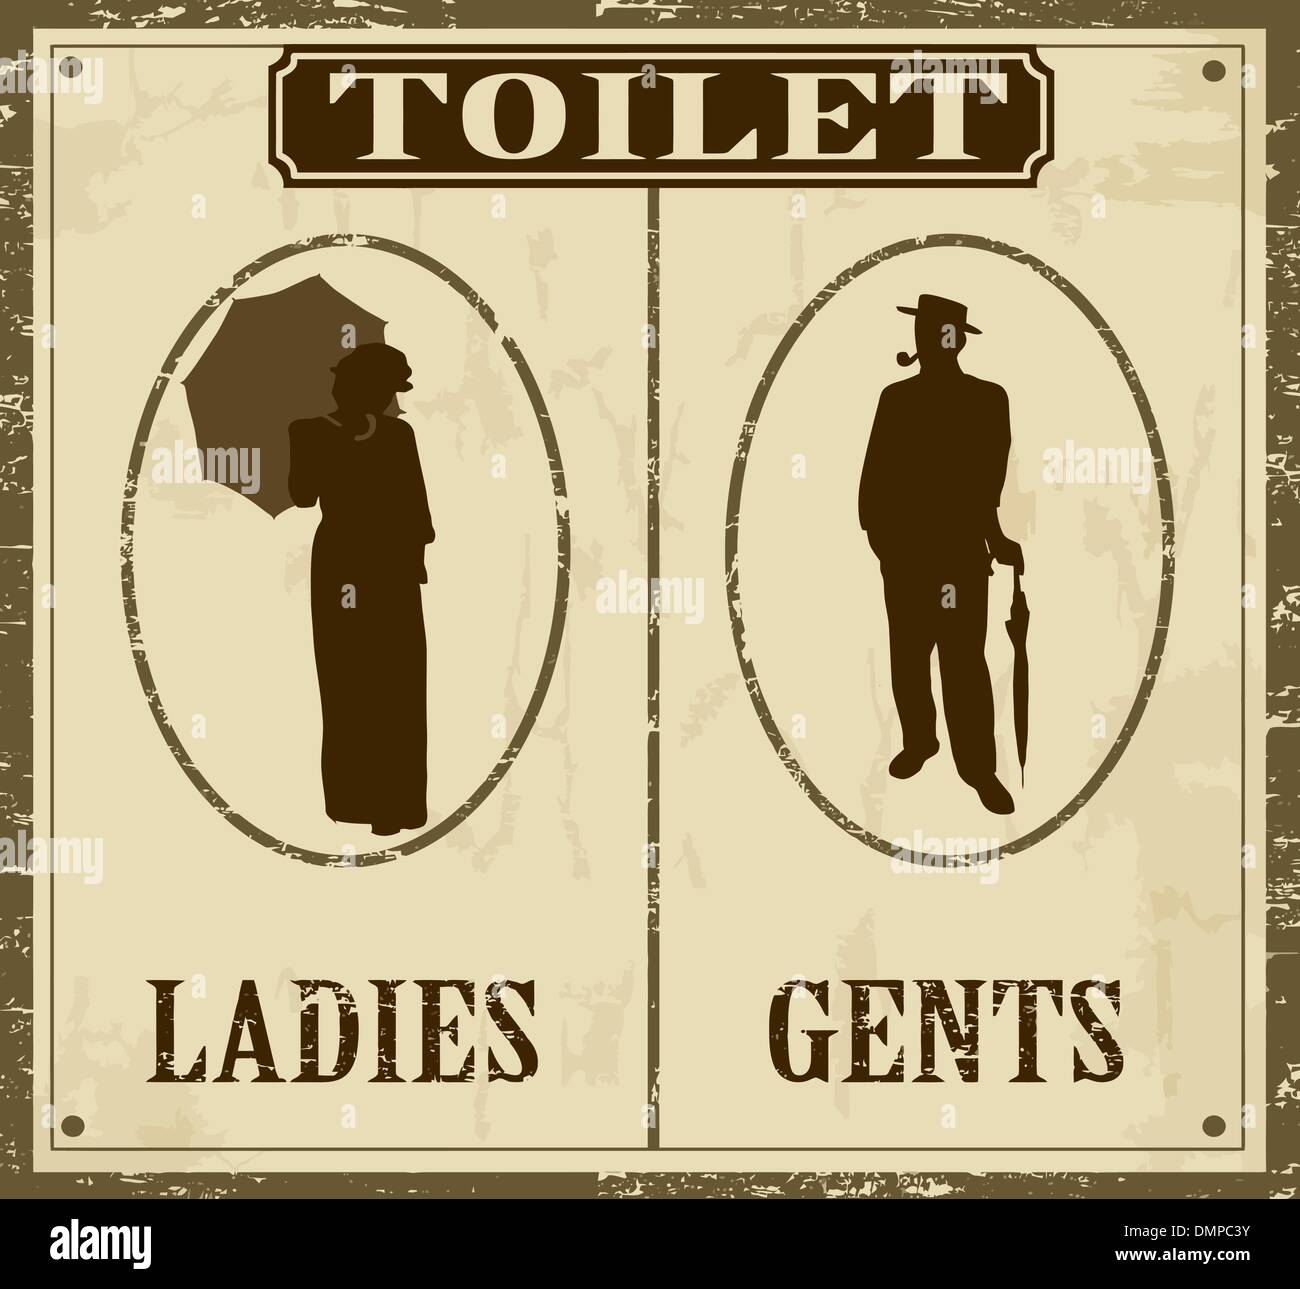 Toilet retro poster Stock Vector